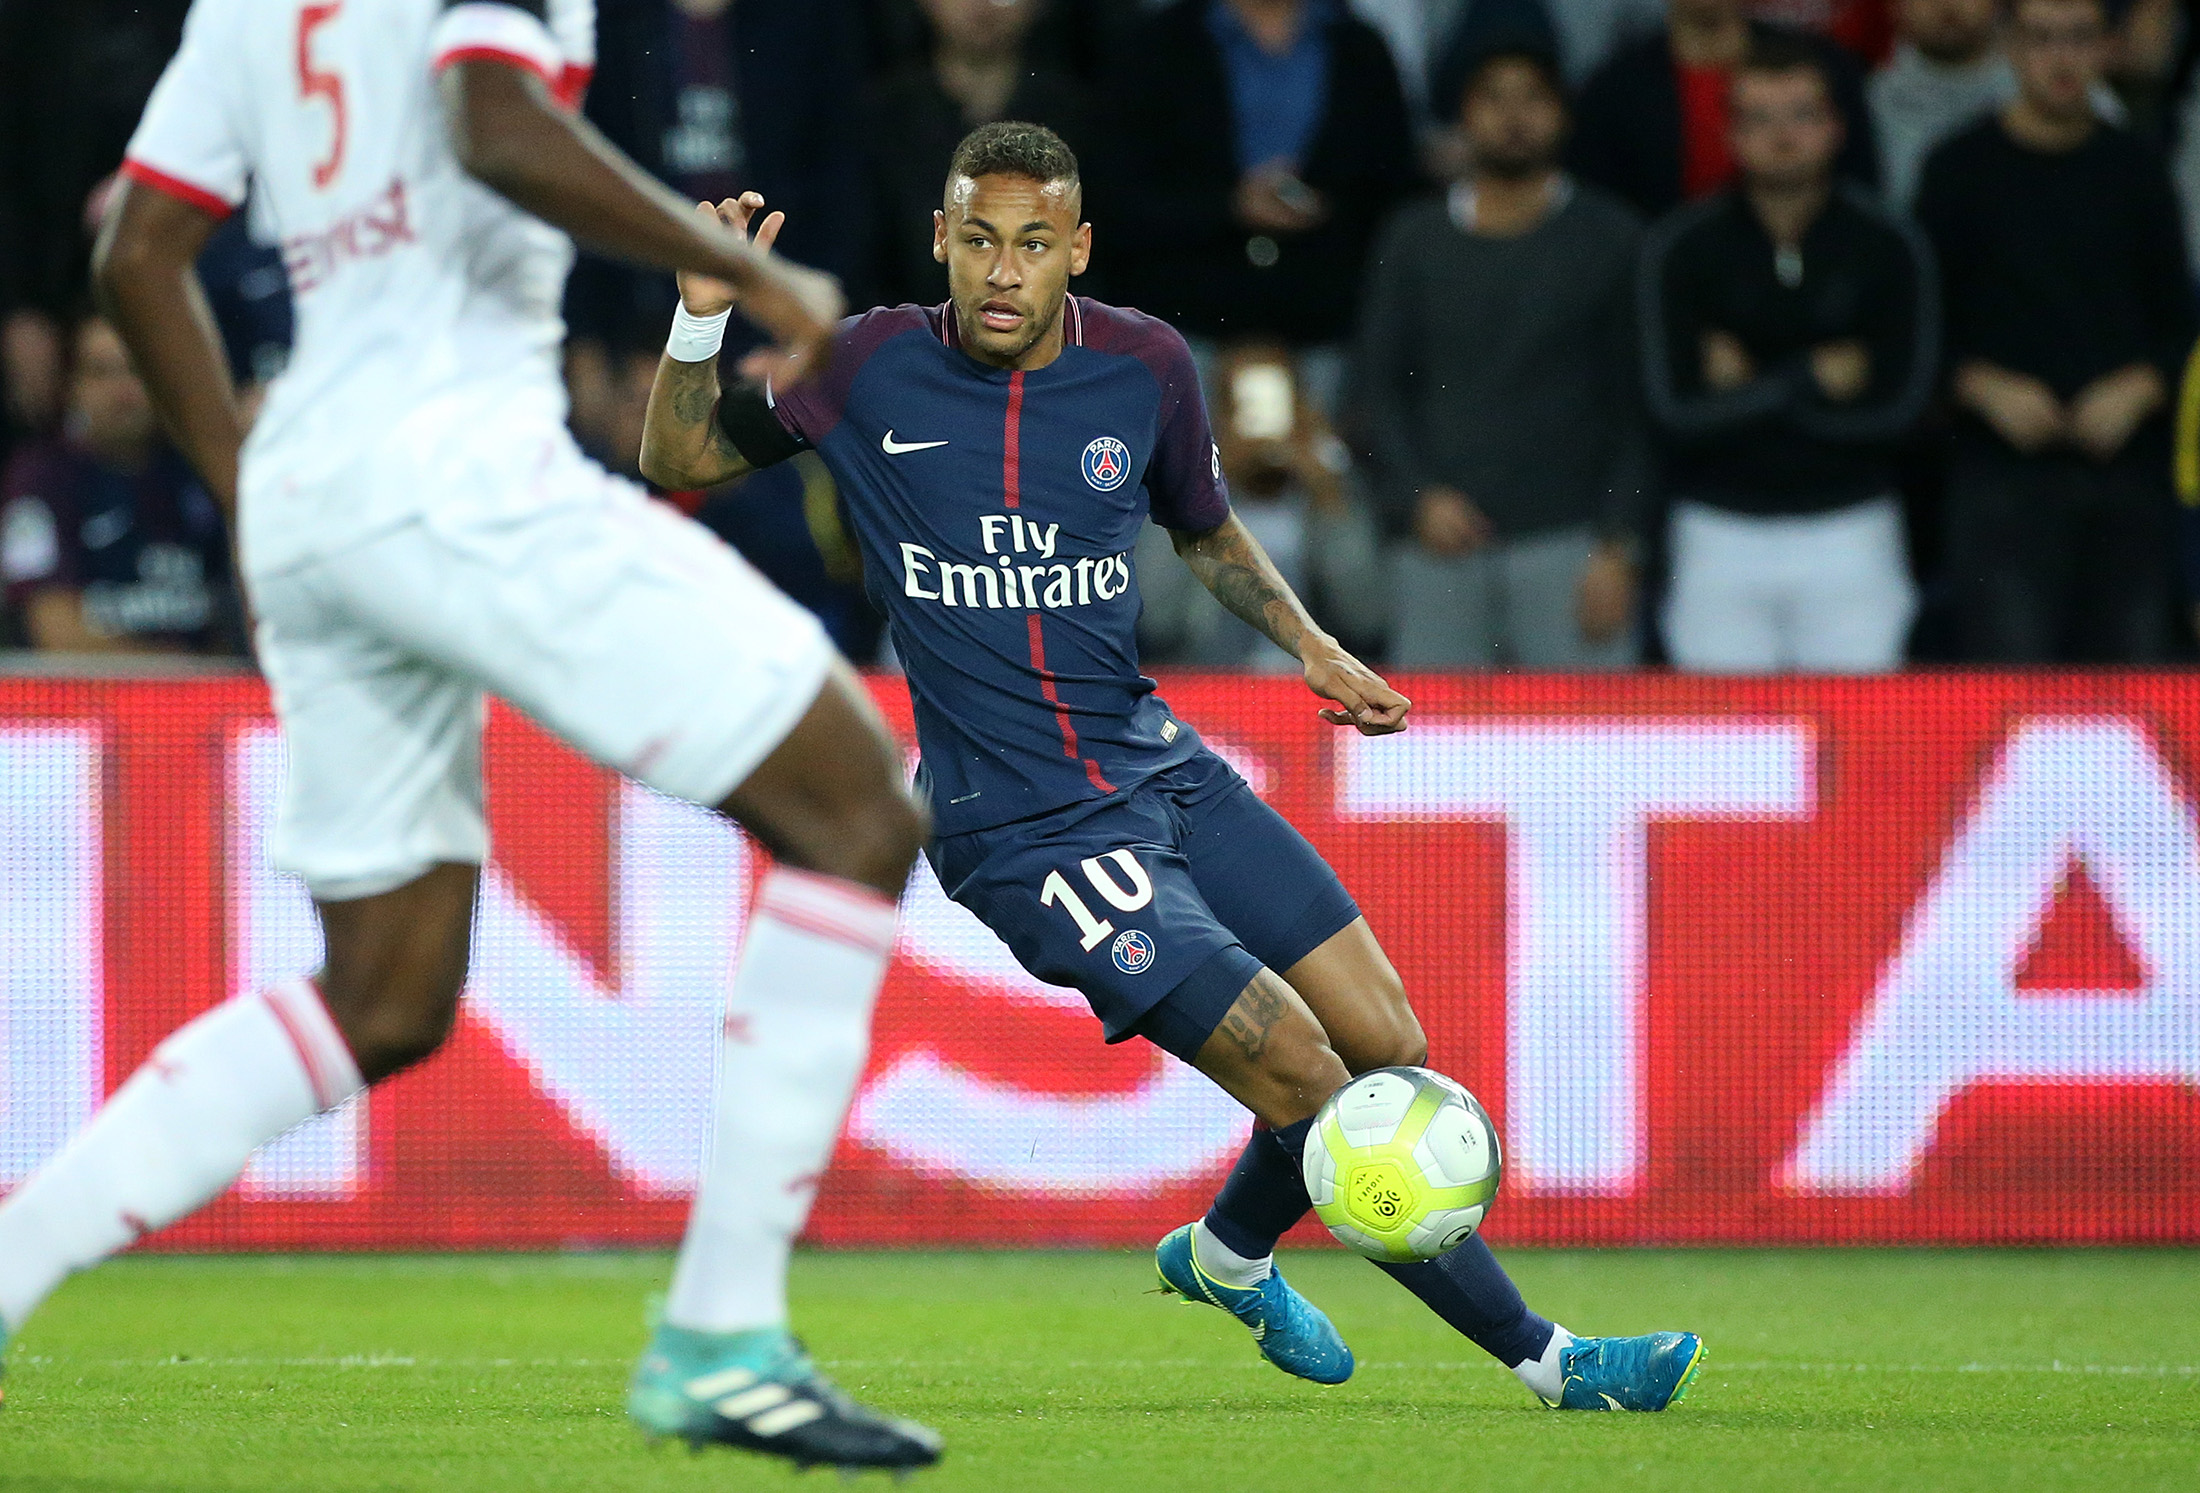 Neymar heading toward exit from Paris Saint-Germain, AP source